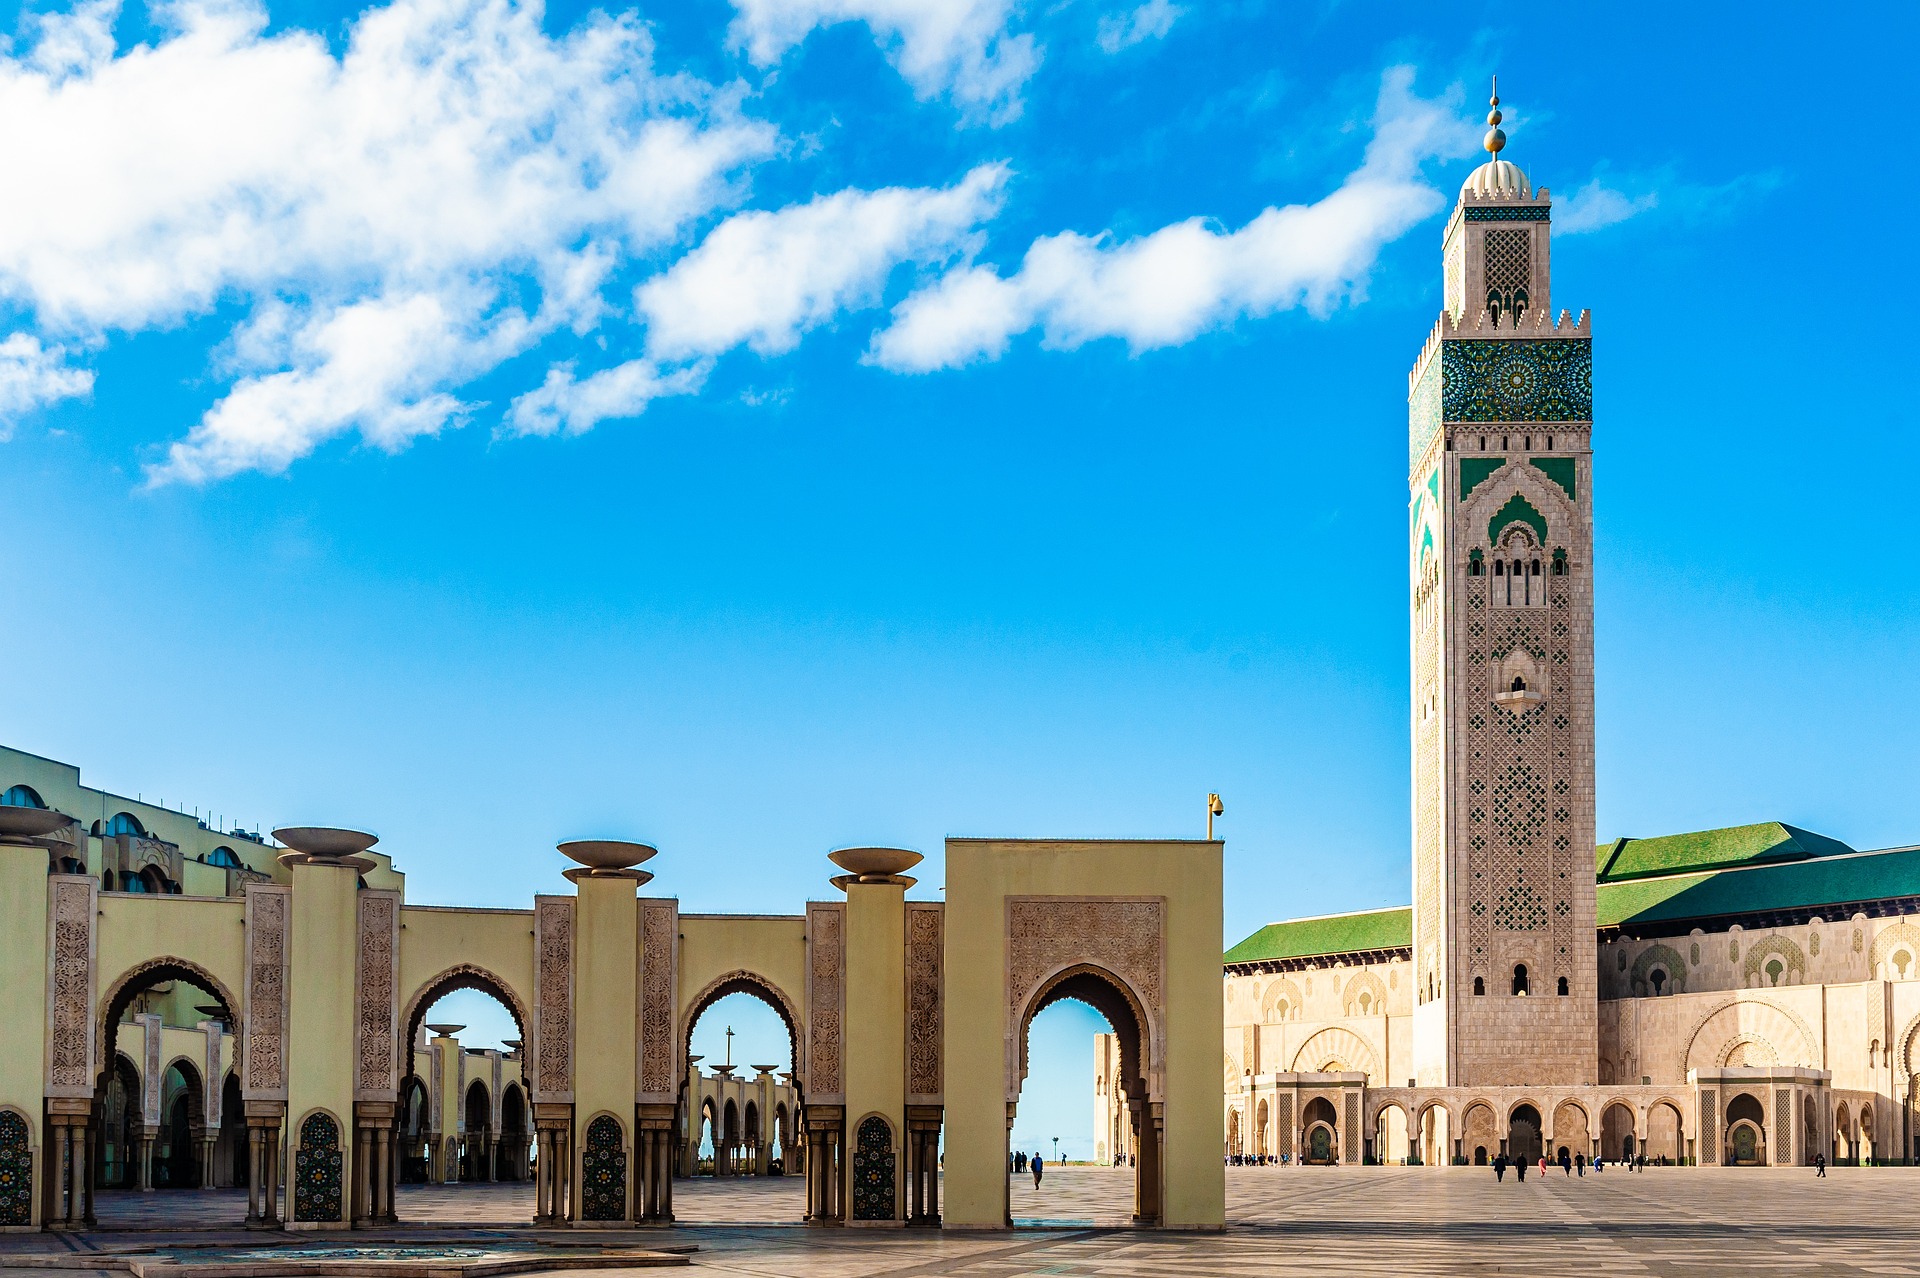 Day 02: Rabat - Casablanca - Marrakech